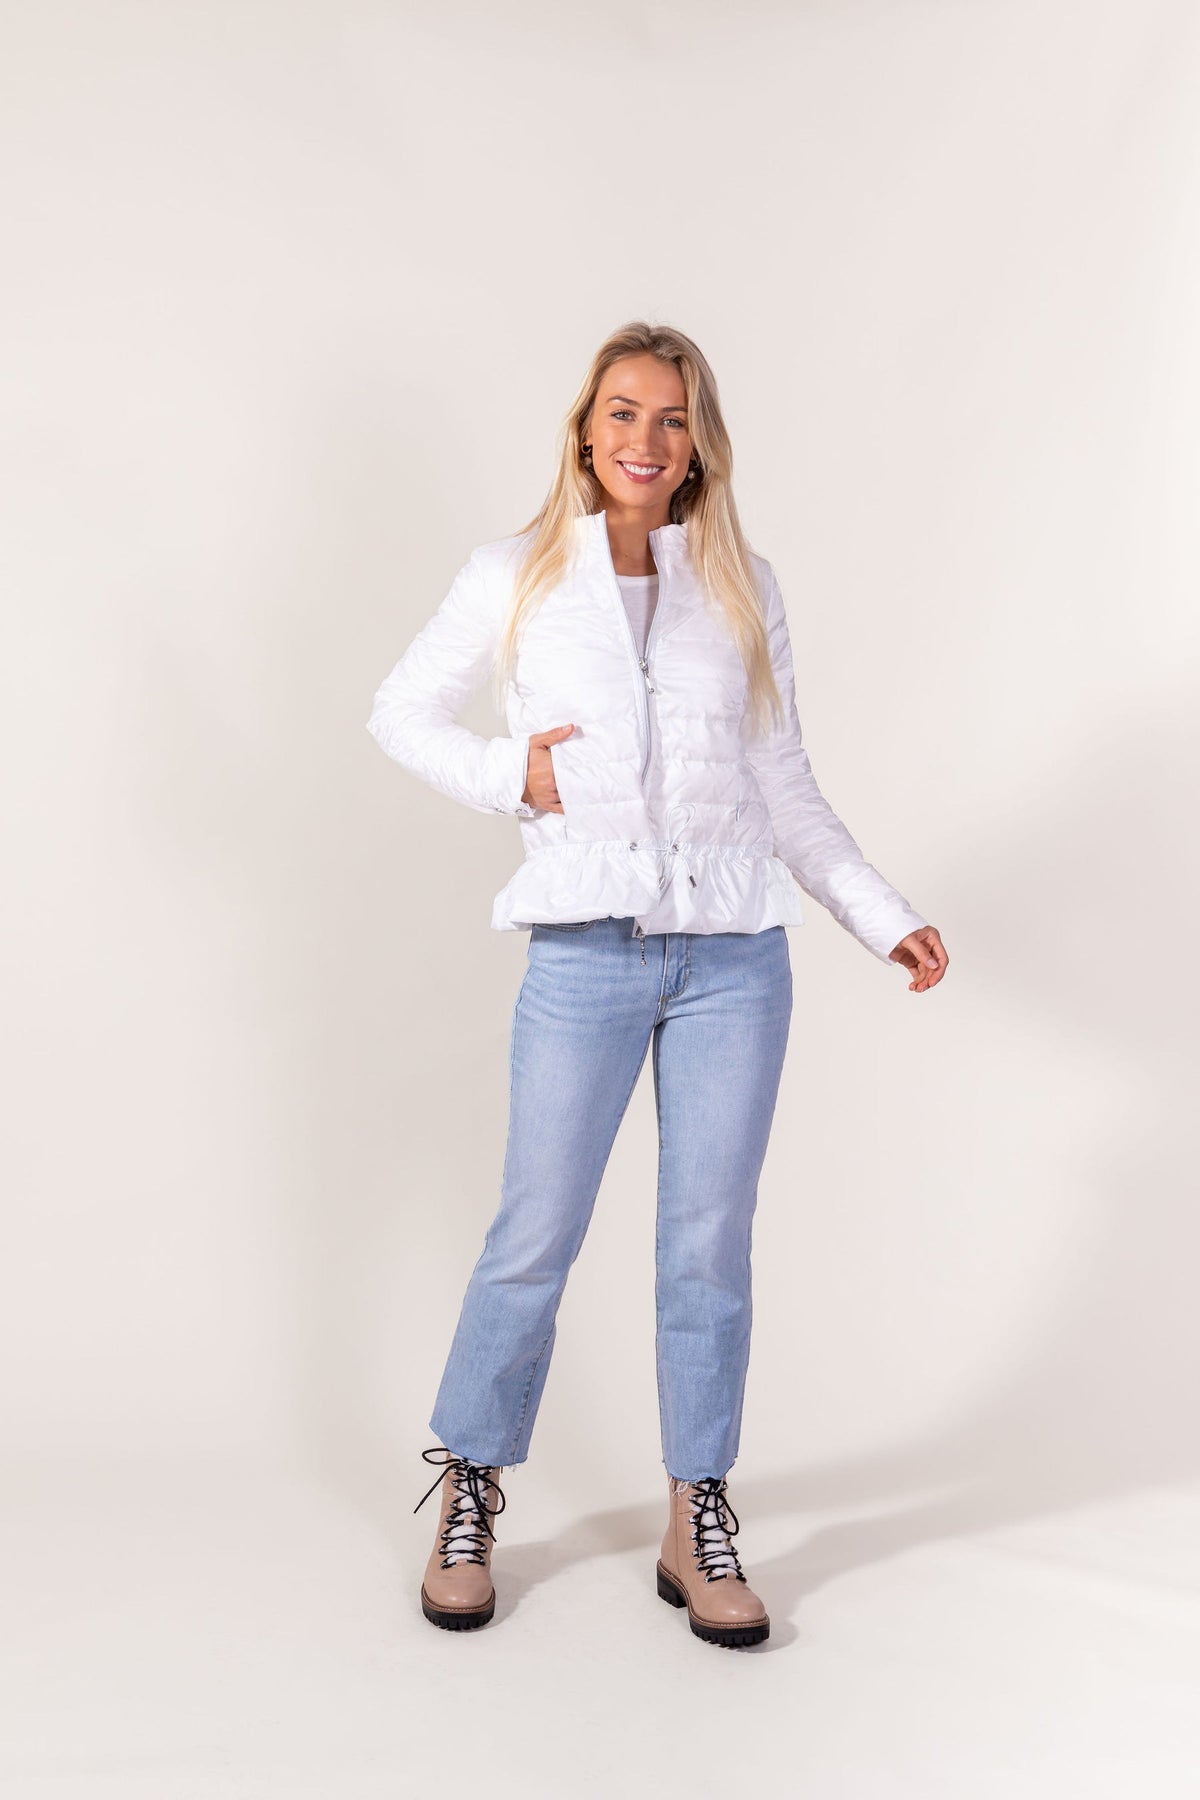 Merlot Poppy Stardust Rhinestone Jeans Small